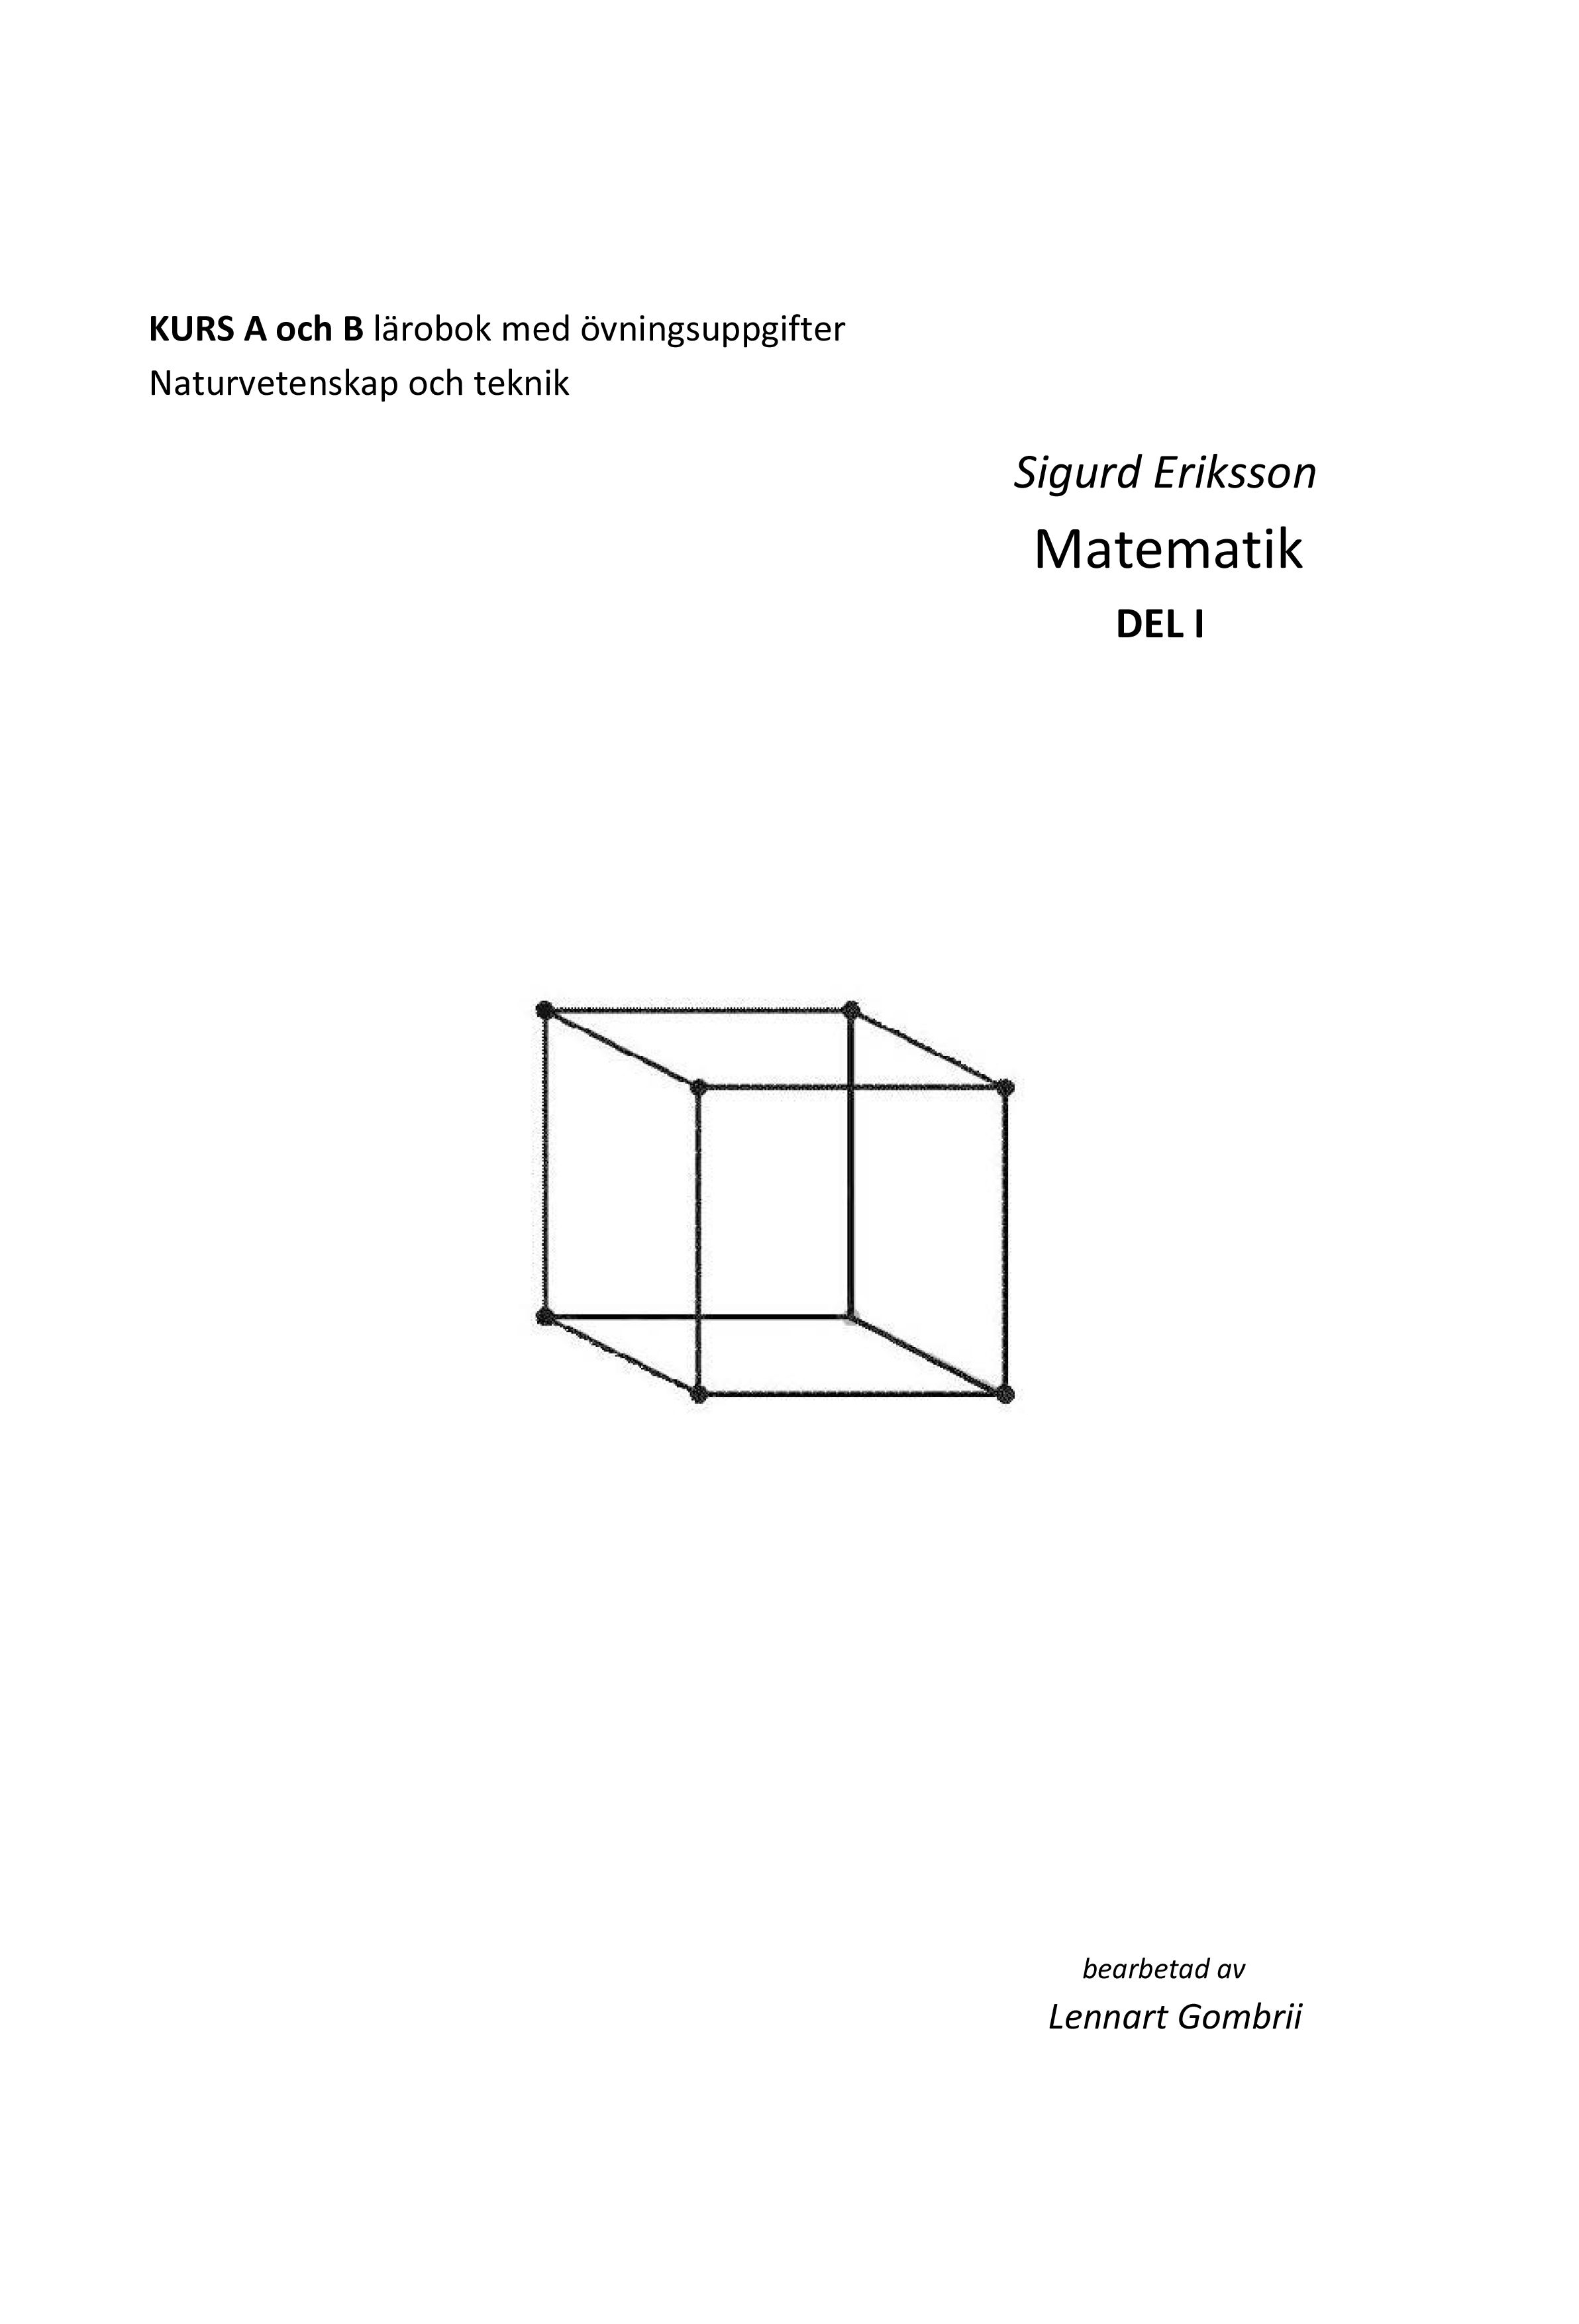 Sigurd Eriksson Matematik DEL I, eBook by Lennart Gombrii